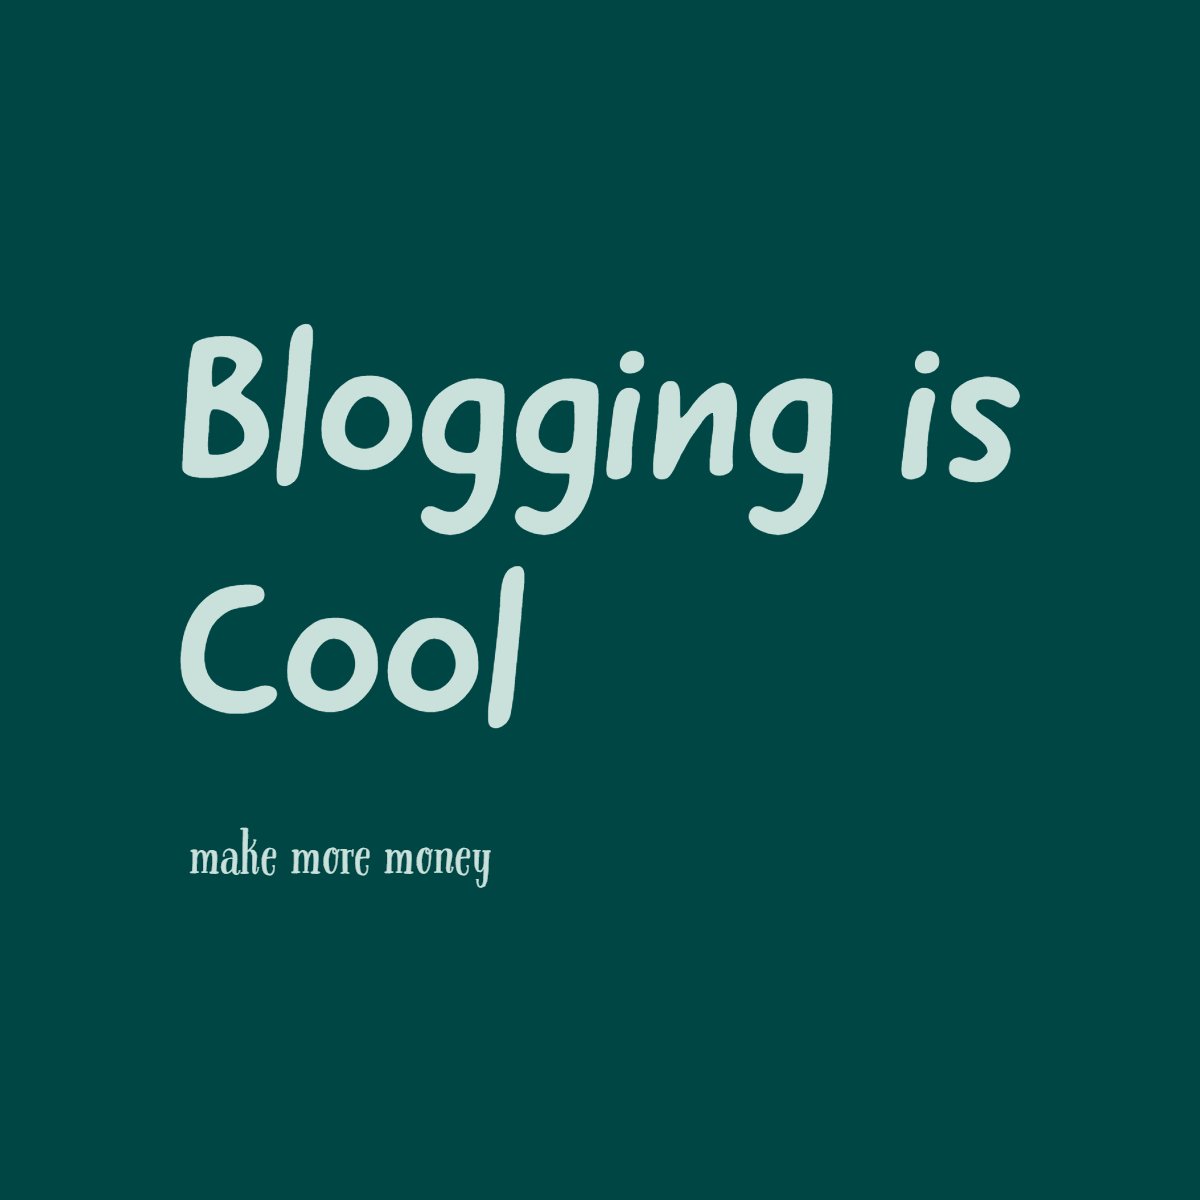 bloggingiscool.com podcasting for blogs growth